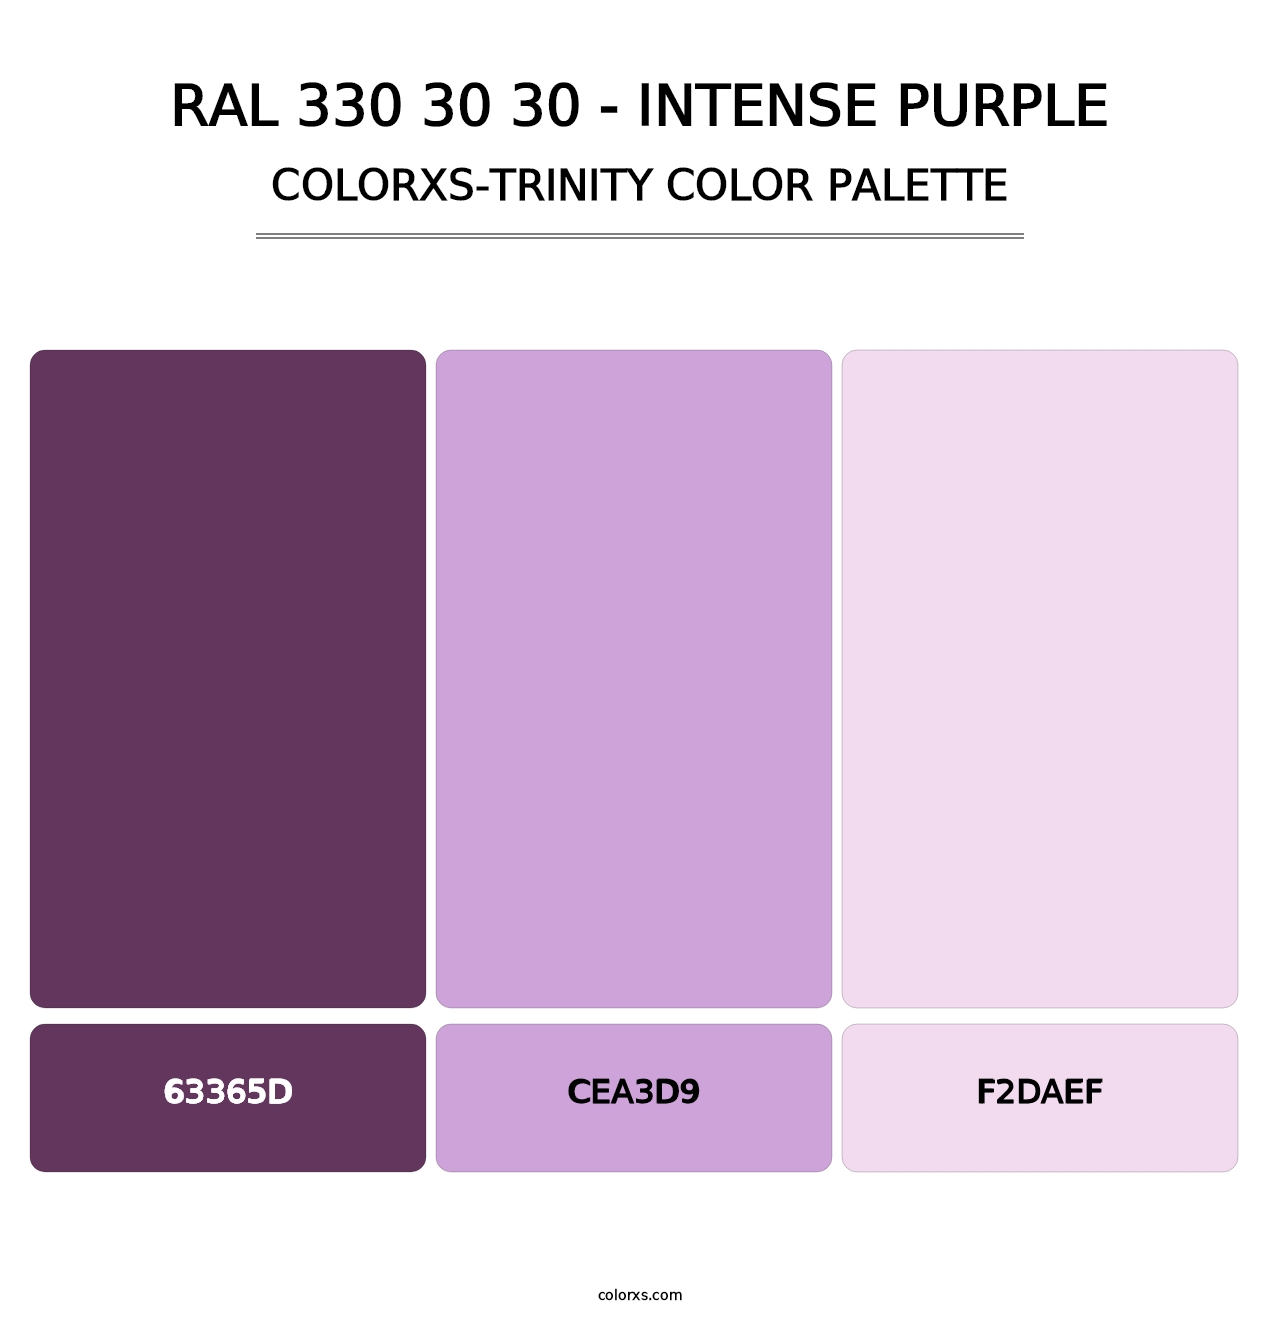 RAL 330 30 30 - Intense Purple - Colorxs Trinity Palette